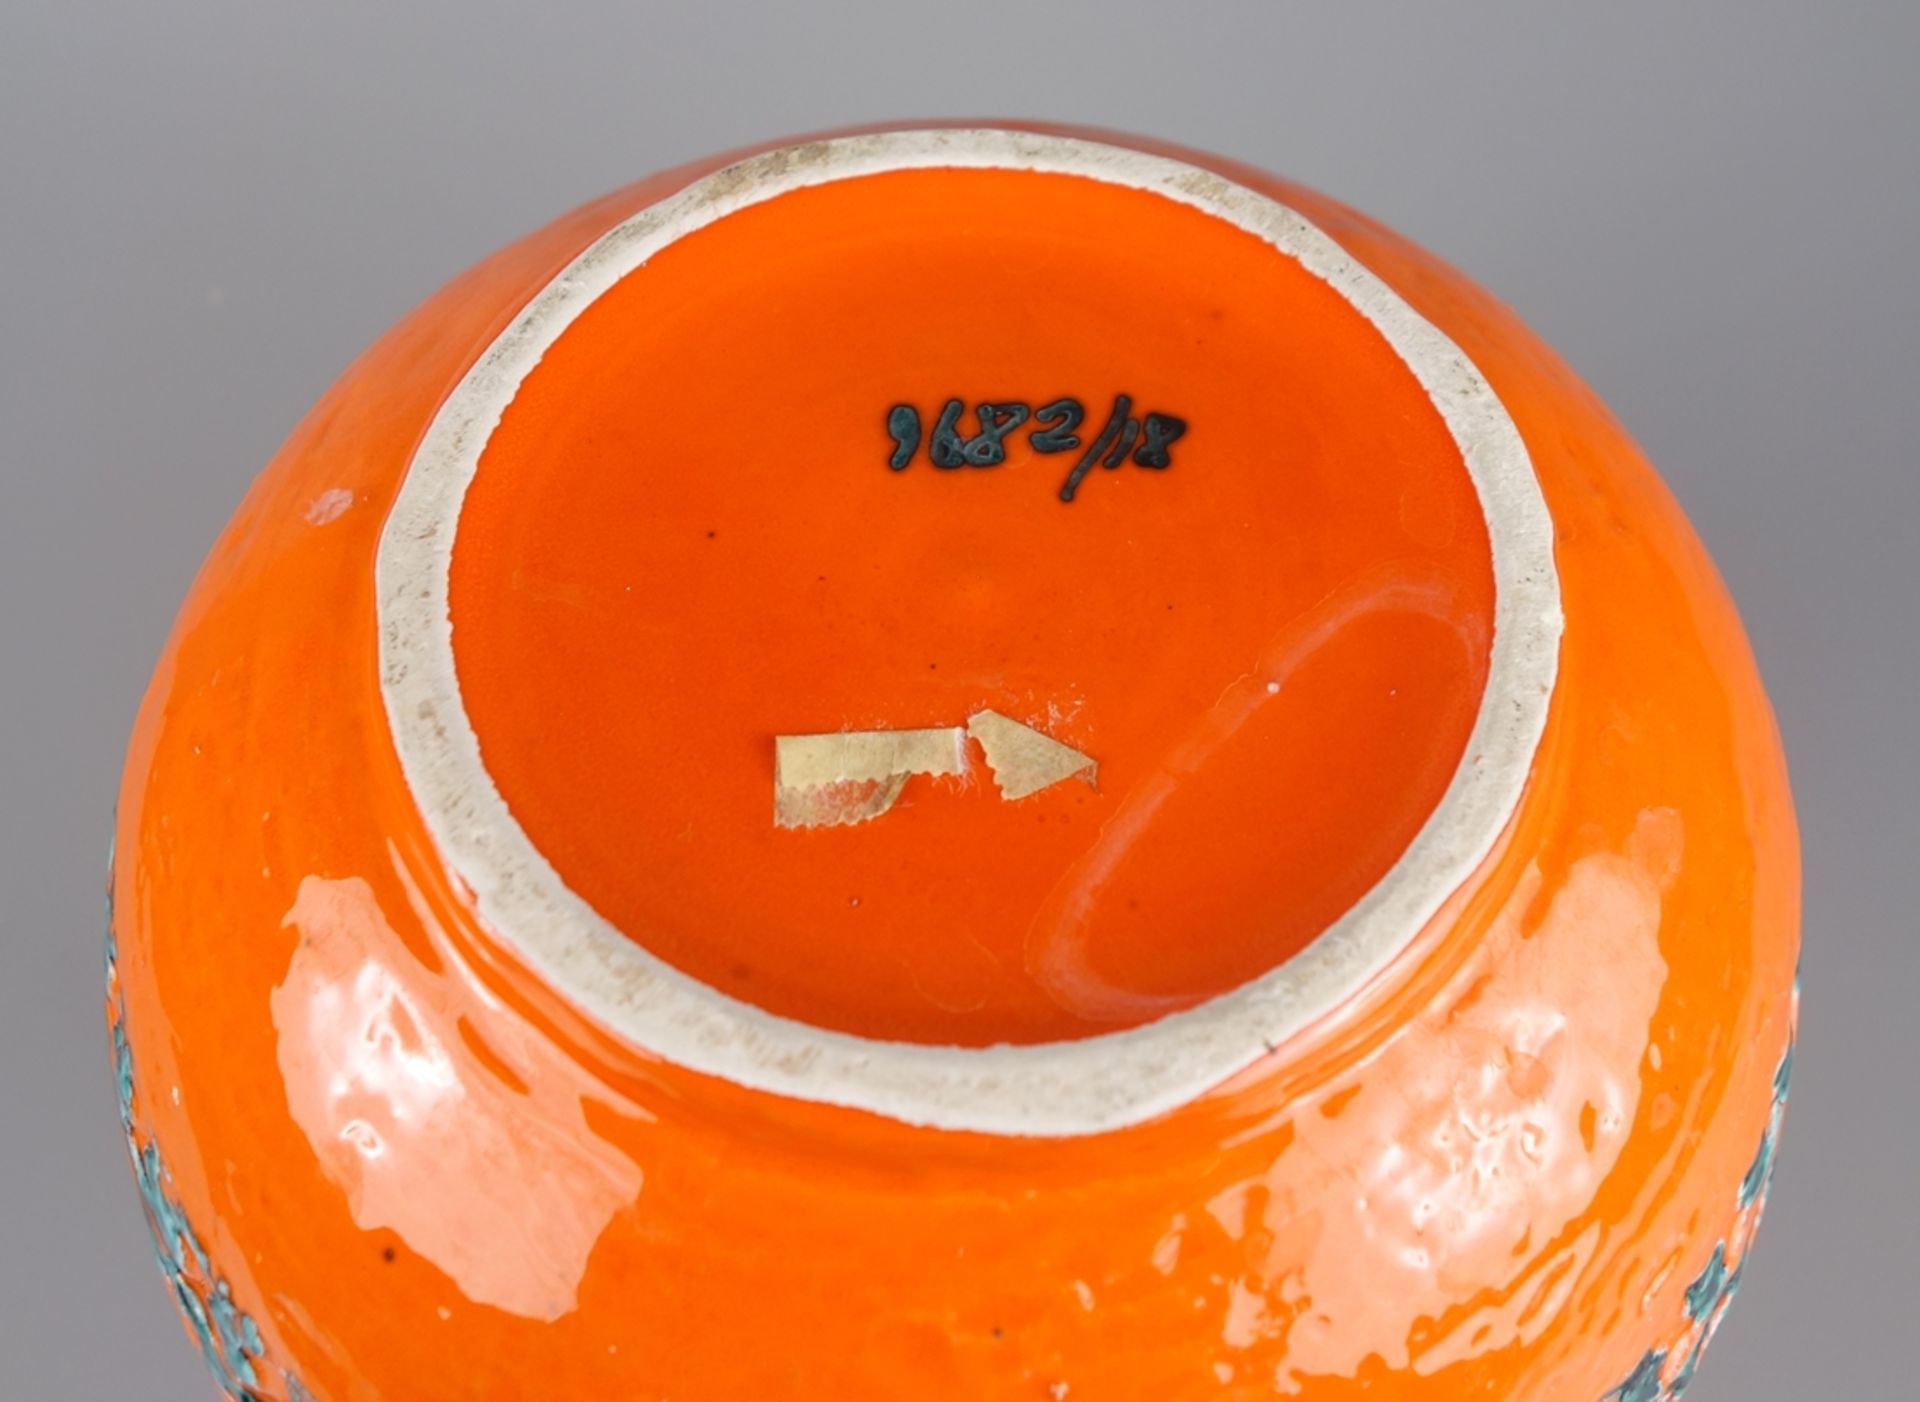 Krug Italica Ars, im Bitossi- Stil, orange glasierte Keramik, 1970er Jahre, rel - Bild 2 aus 2